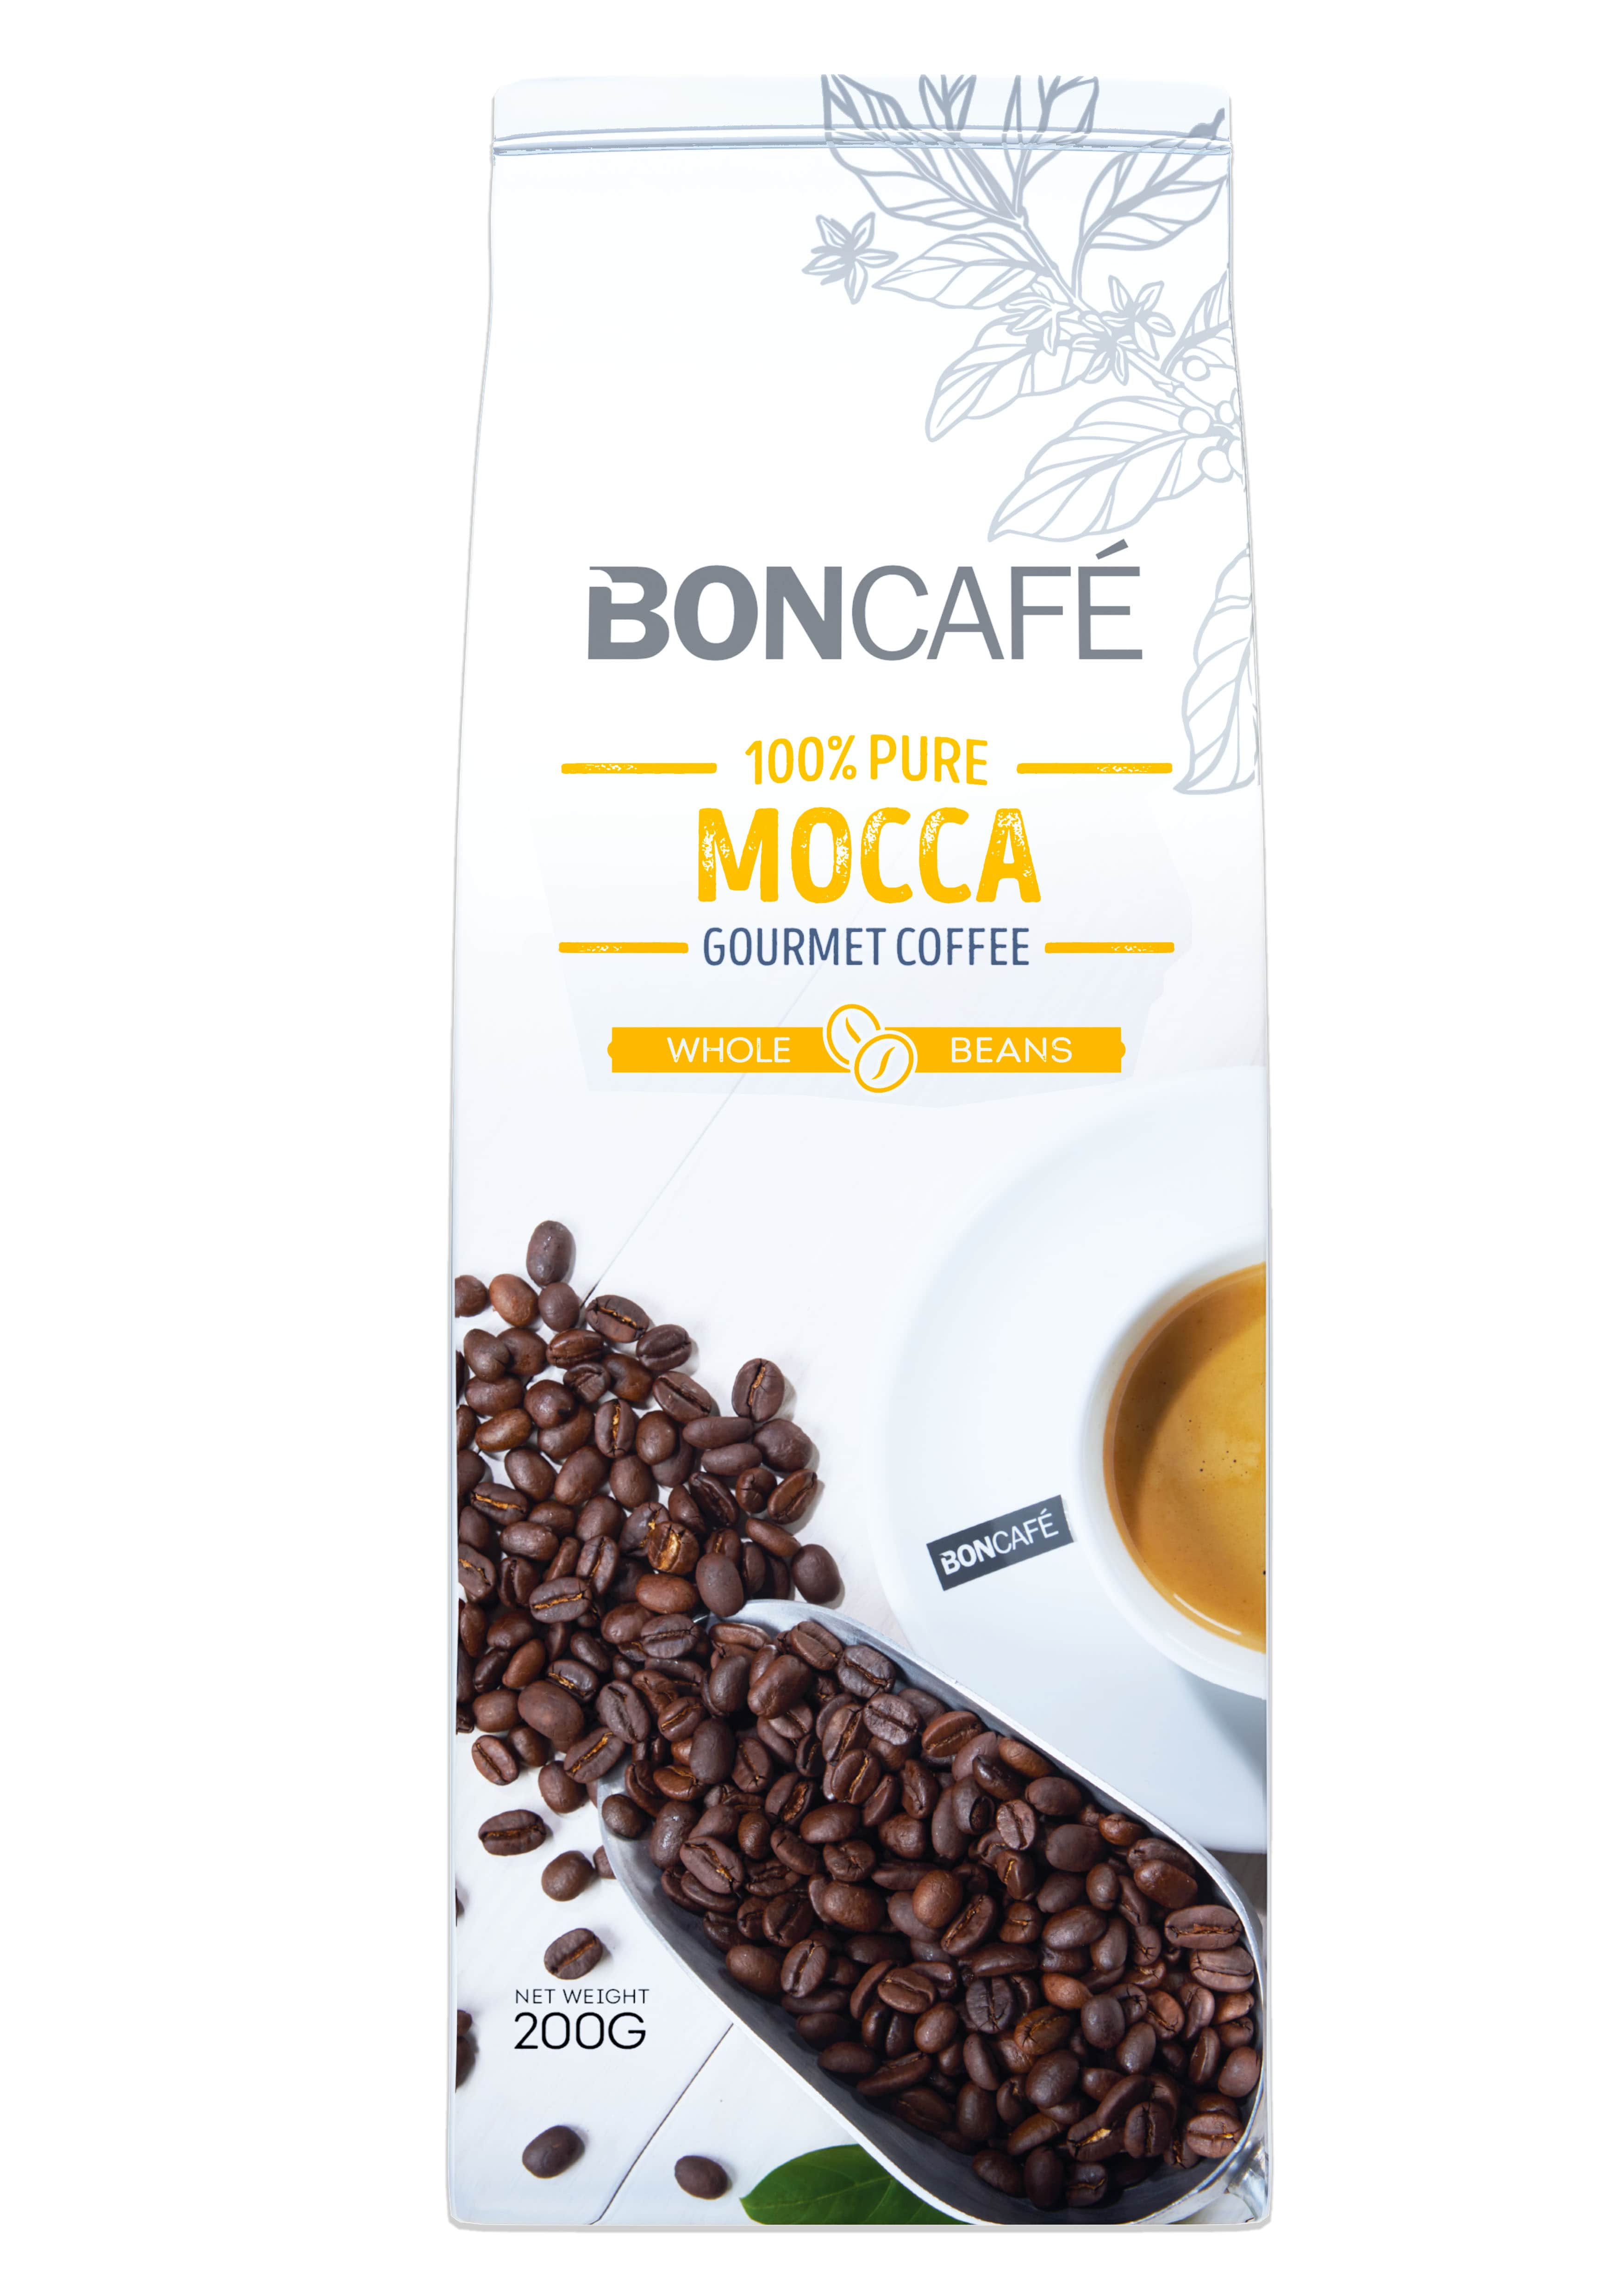 BONCAFÉ - GOURMET COLLECTION COFFEE BEAN: MOCCA BLEND